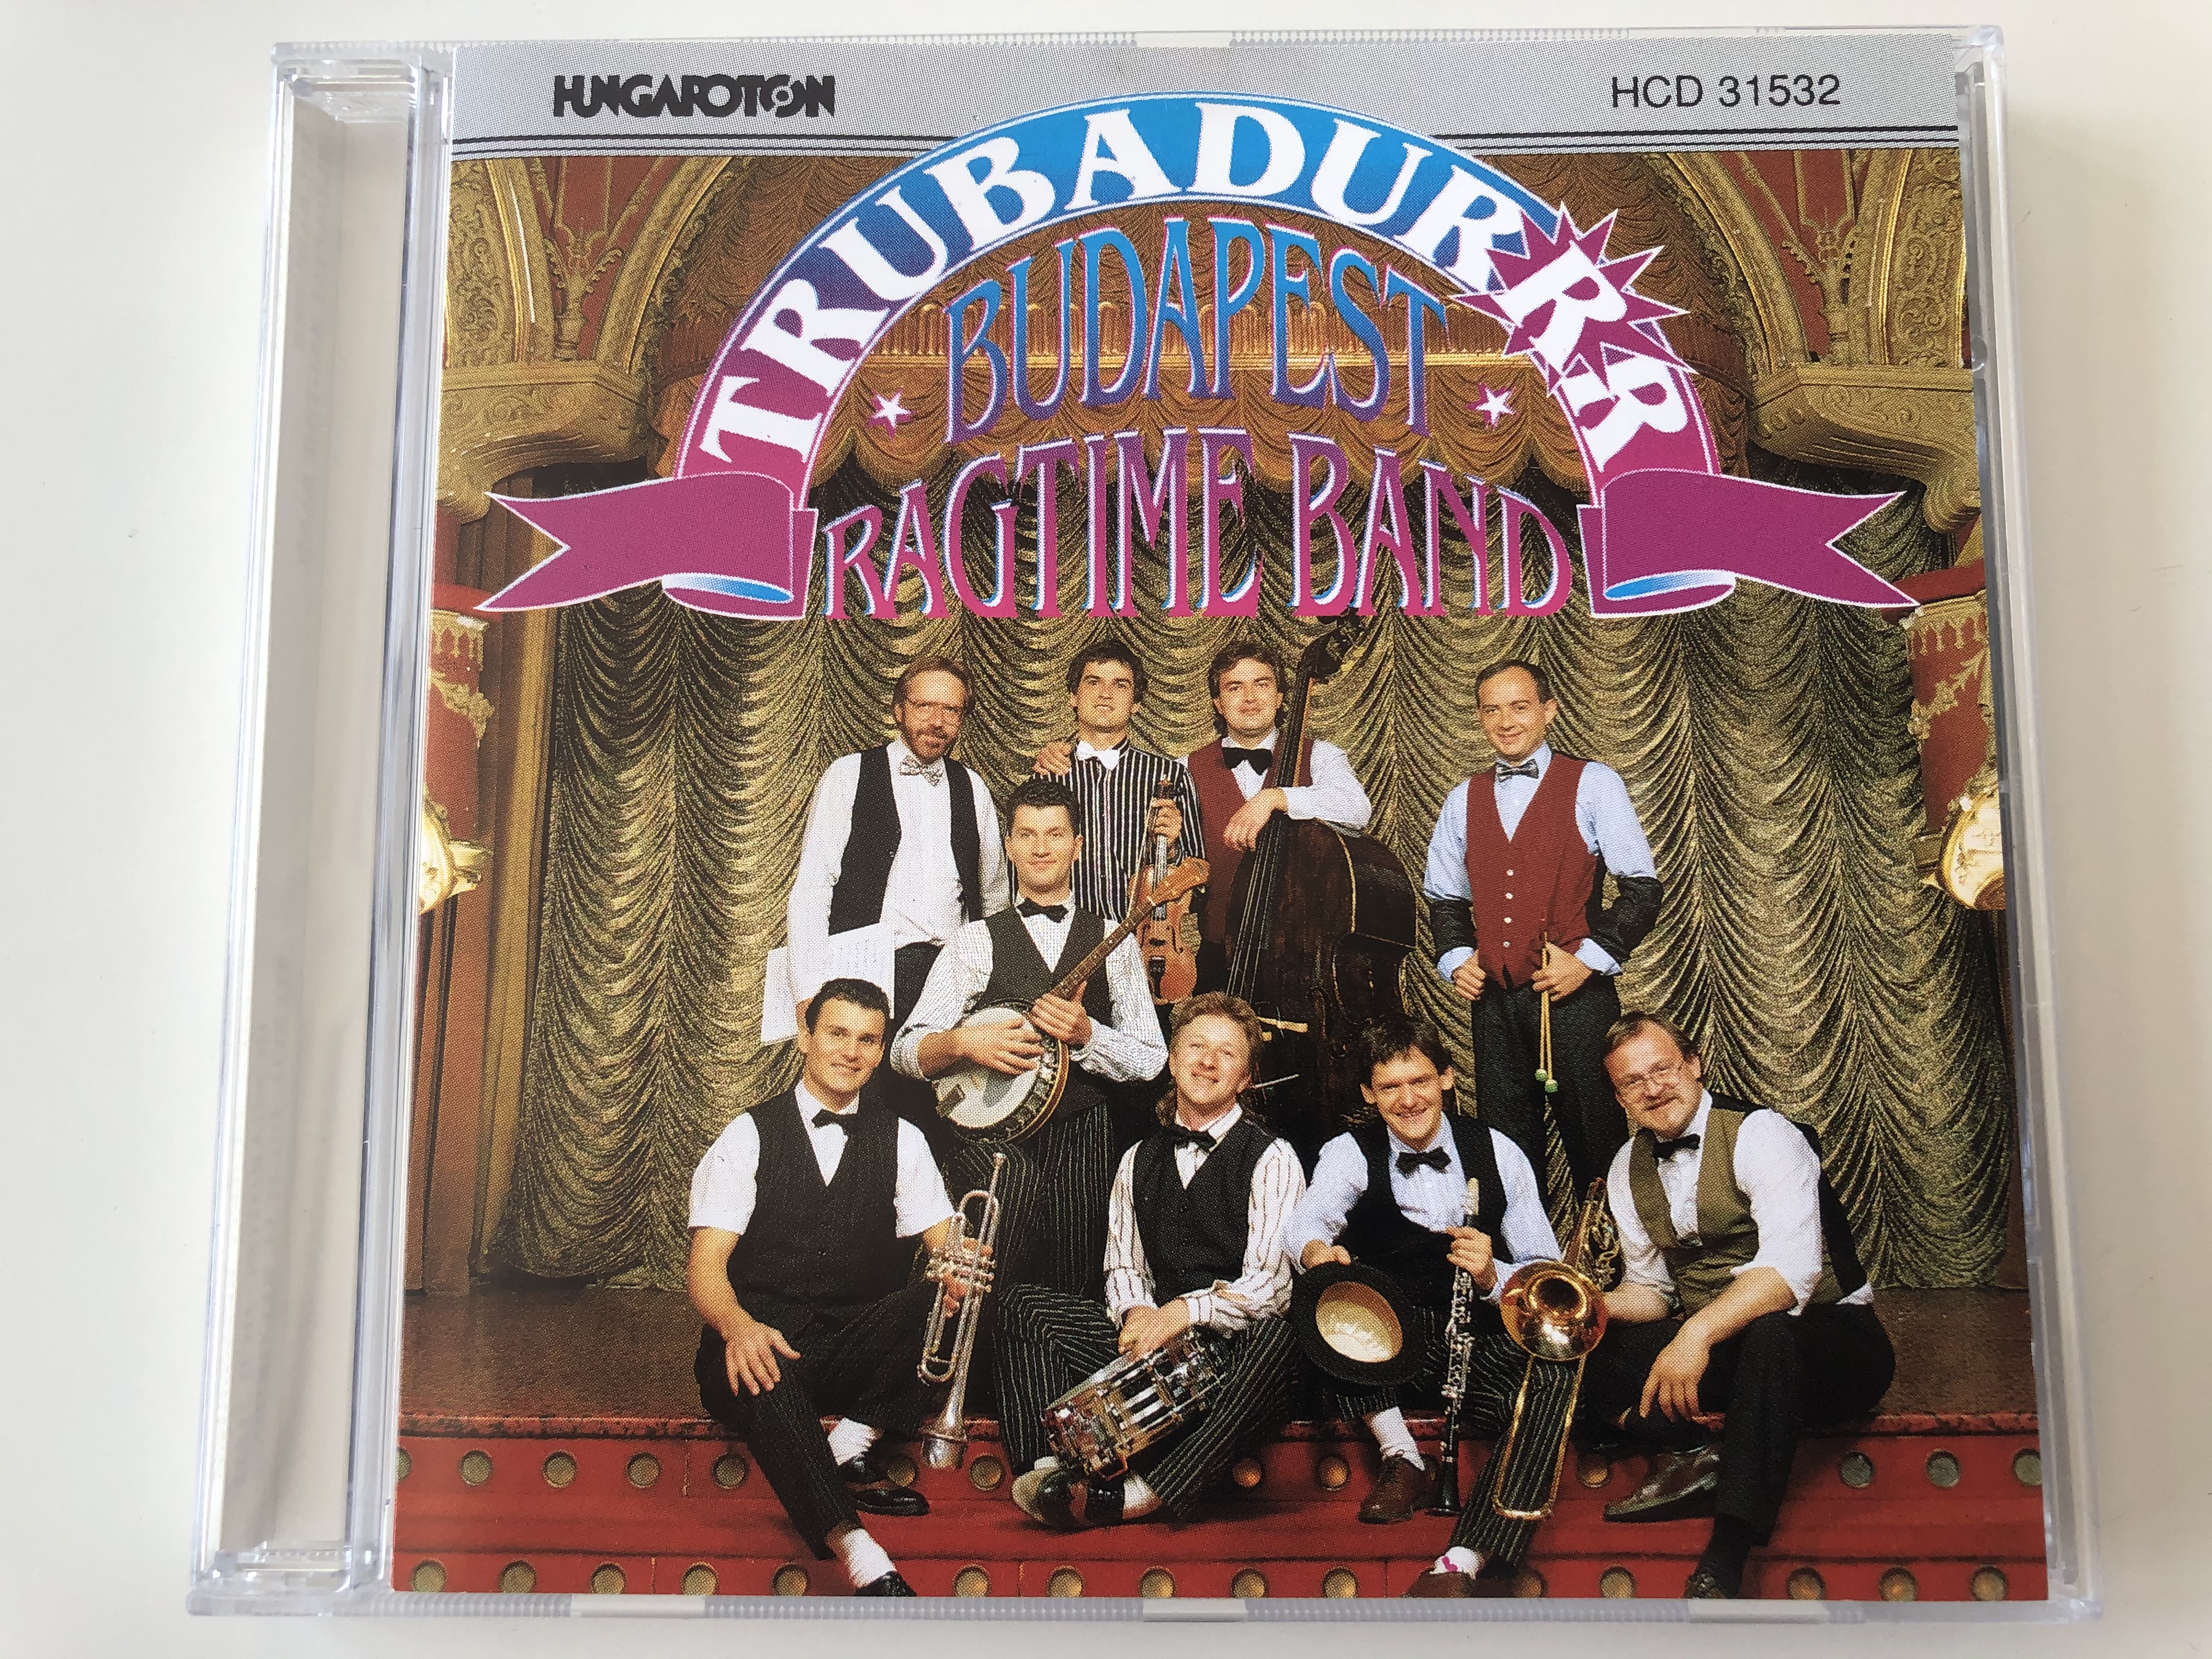 trubadurrr-budapest-ragtime-band-audio-cd-1993-stereo-hcd-31532-1-.jpg